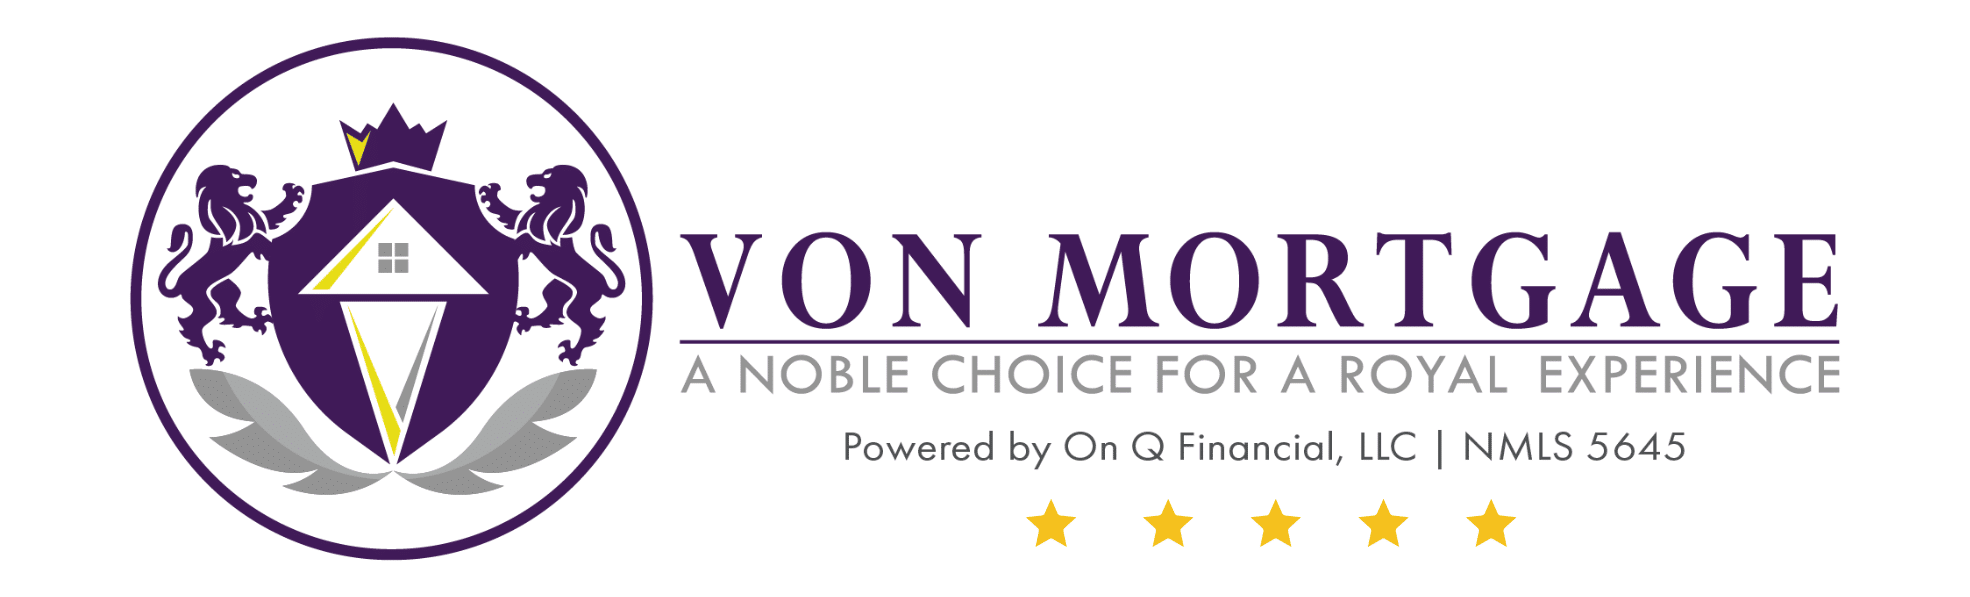 Von Mortgage Logo With Five Stars